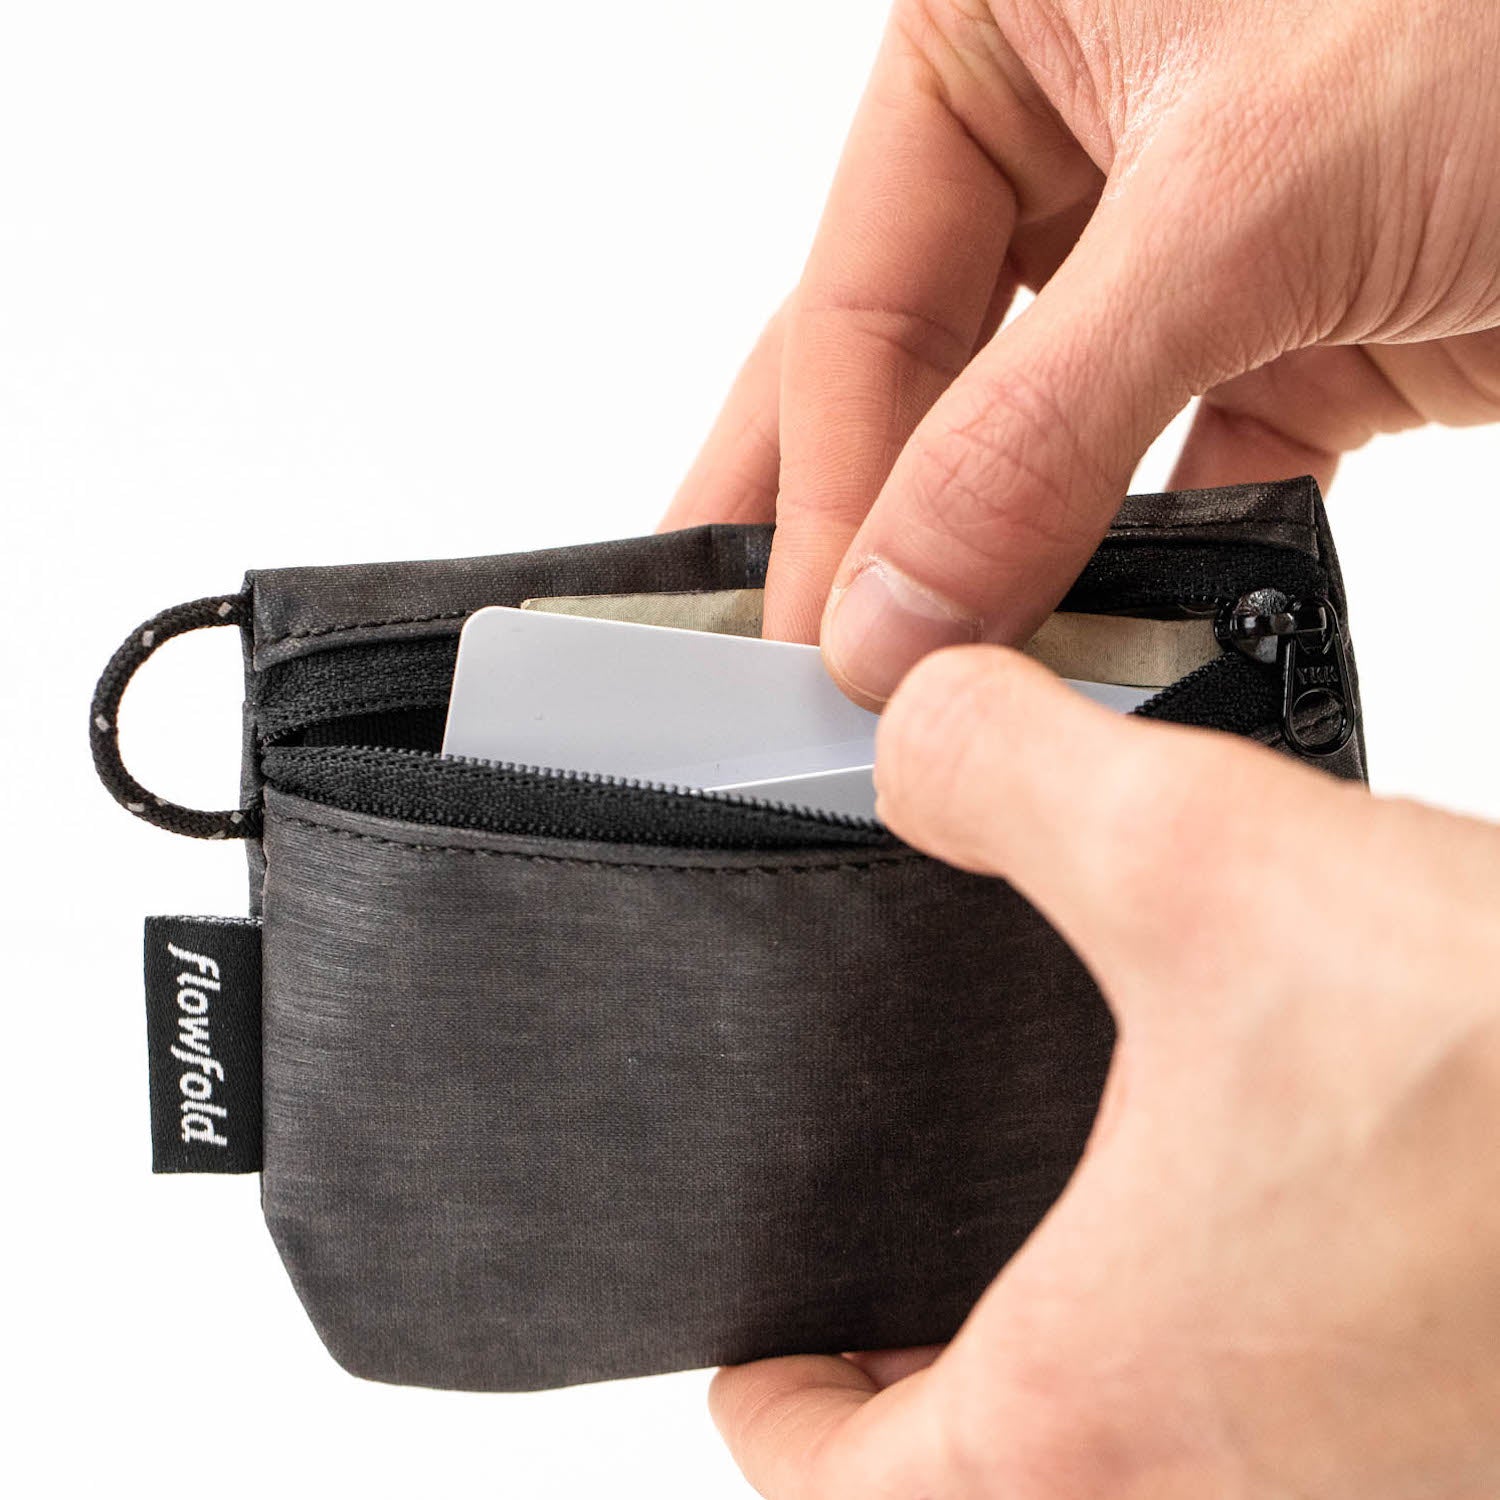 Mini Zipper Pouch, Fabric Wallet, Minimalist Wallet, Money Pouch, Zipper  Bag, Coin Pouch, Small Essentials Pouch 